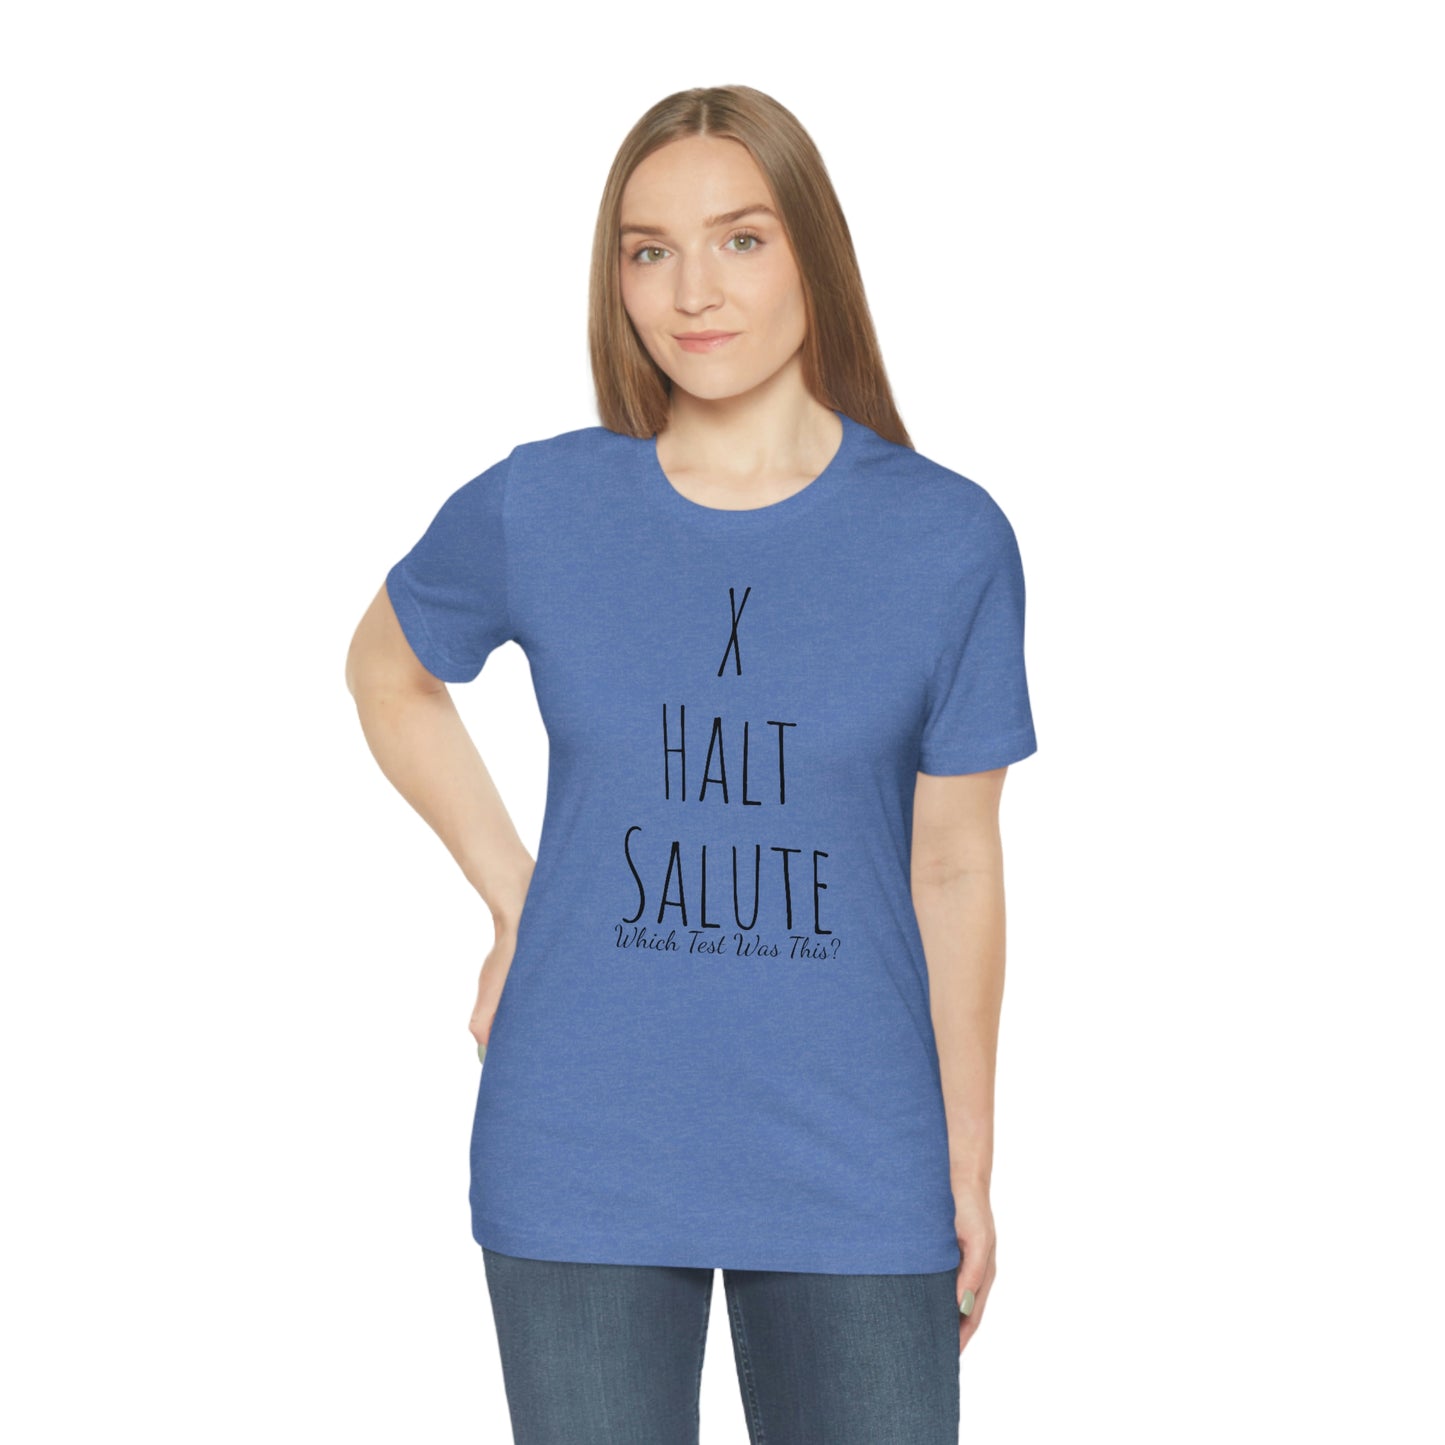 Shirt - X, Halt, Salute, Which test was it again?